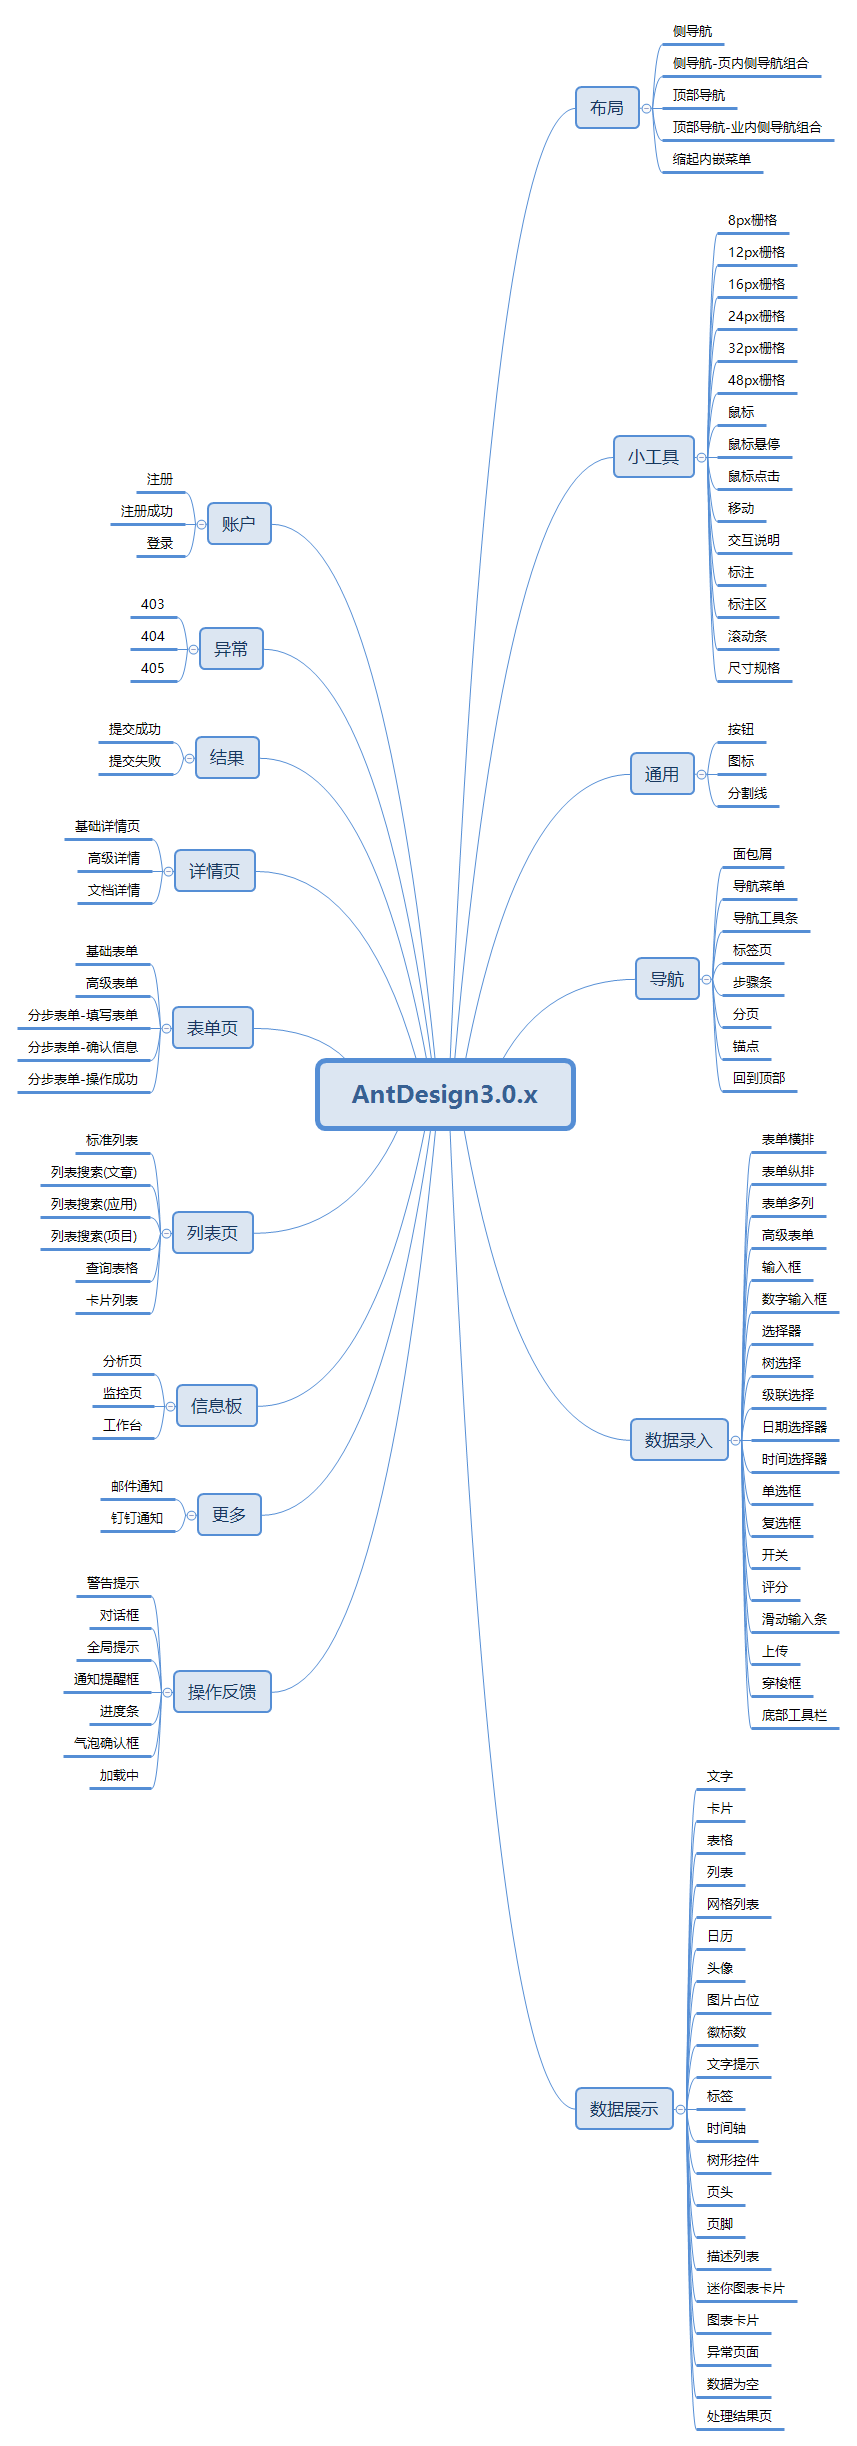  AxureFile_AntDesign3.0.x(非预览版)